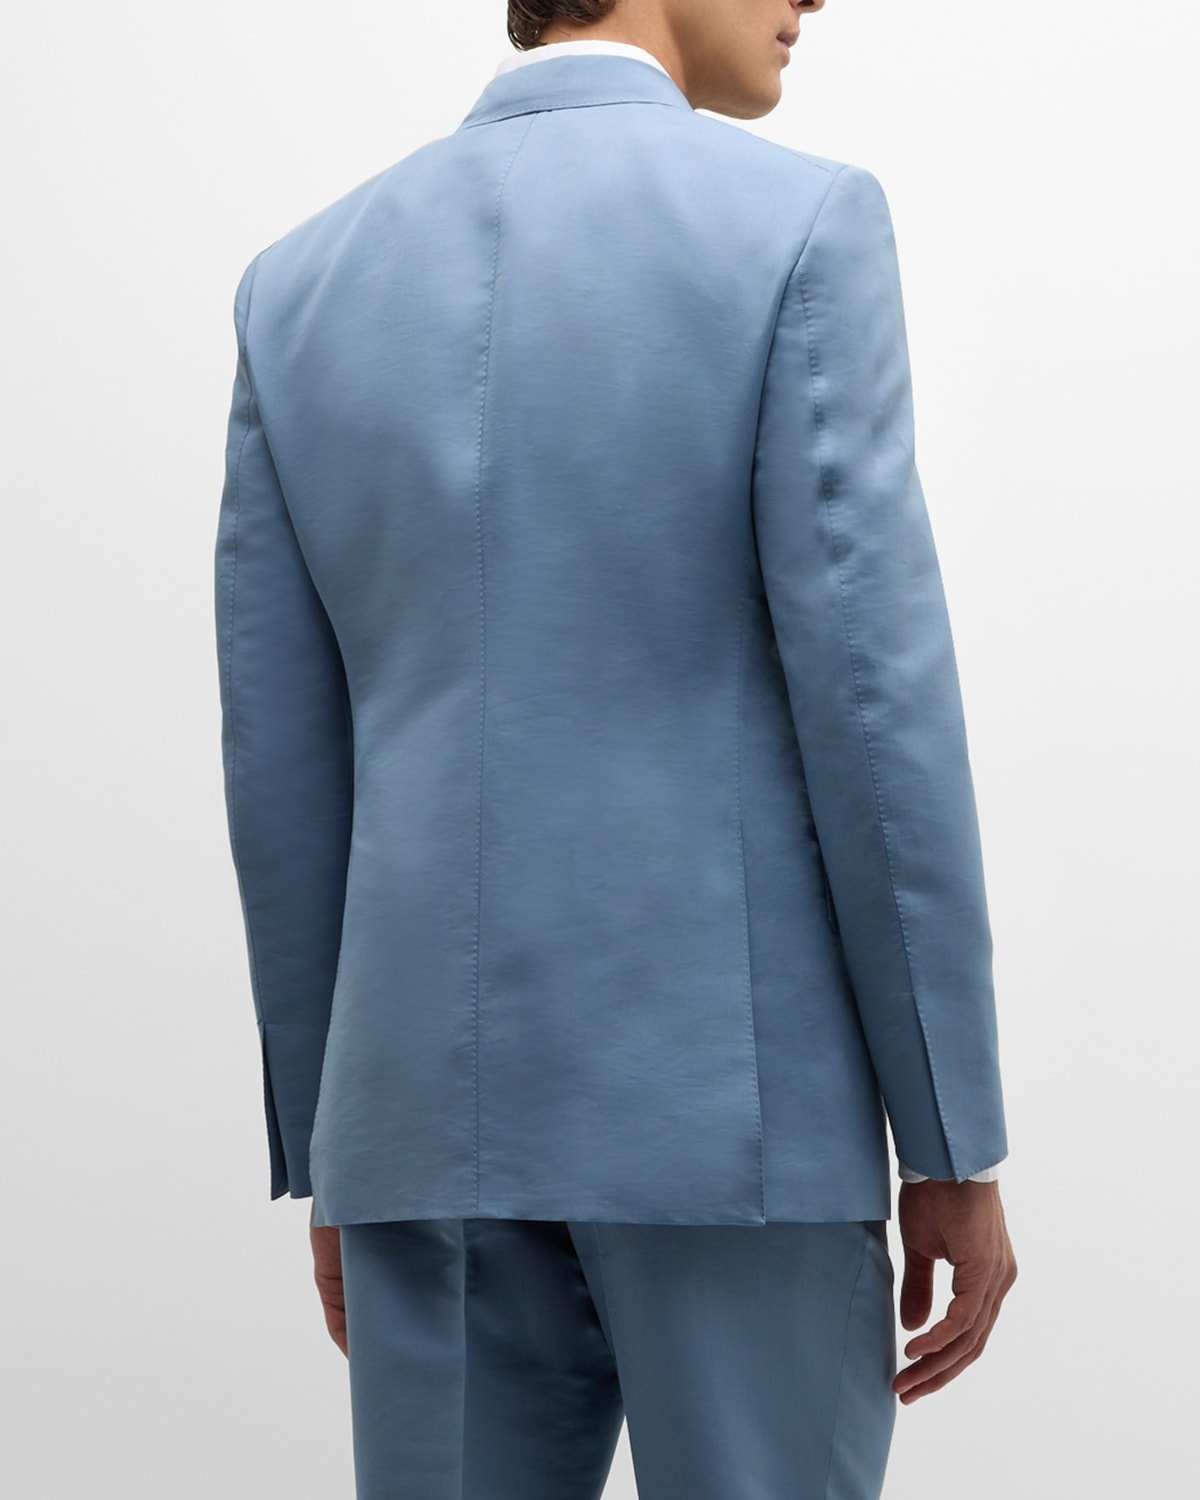 Men's Shelton Piece-Dyed Poplin Suit - 5